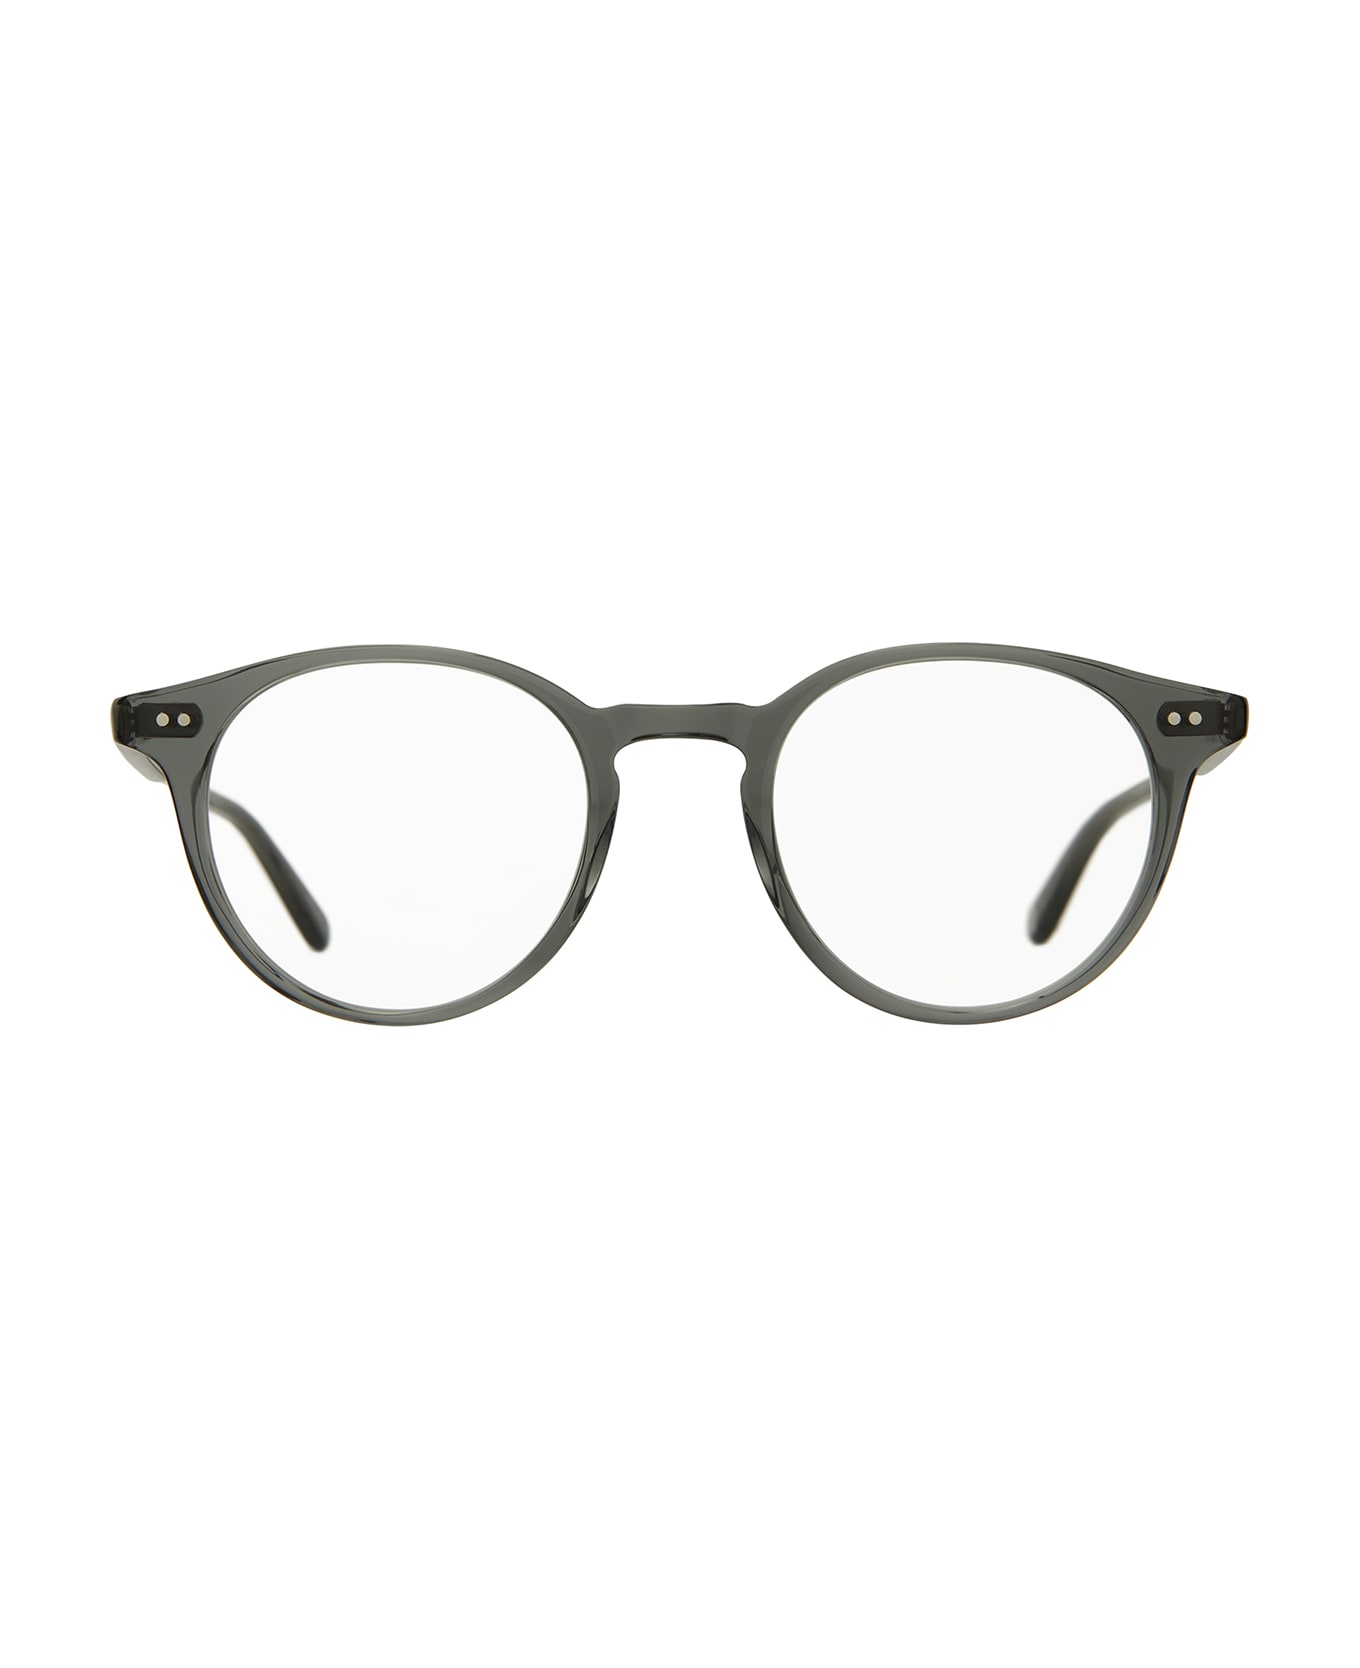 Garrett Leight Clune Sea Grey Glasses - Sea Grey